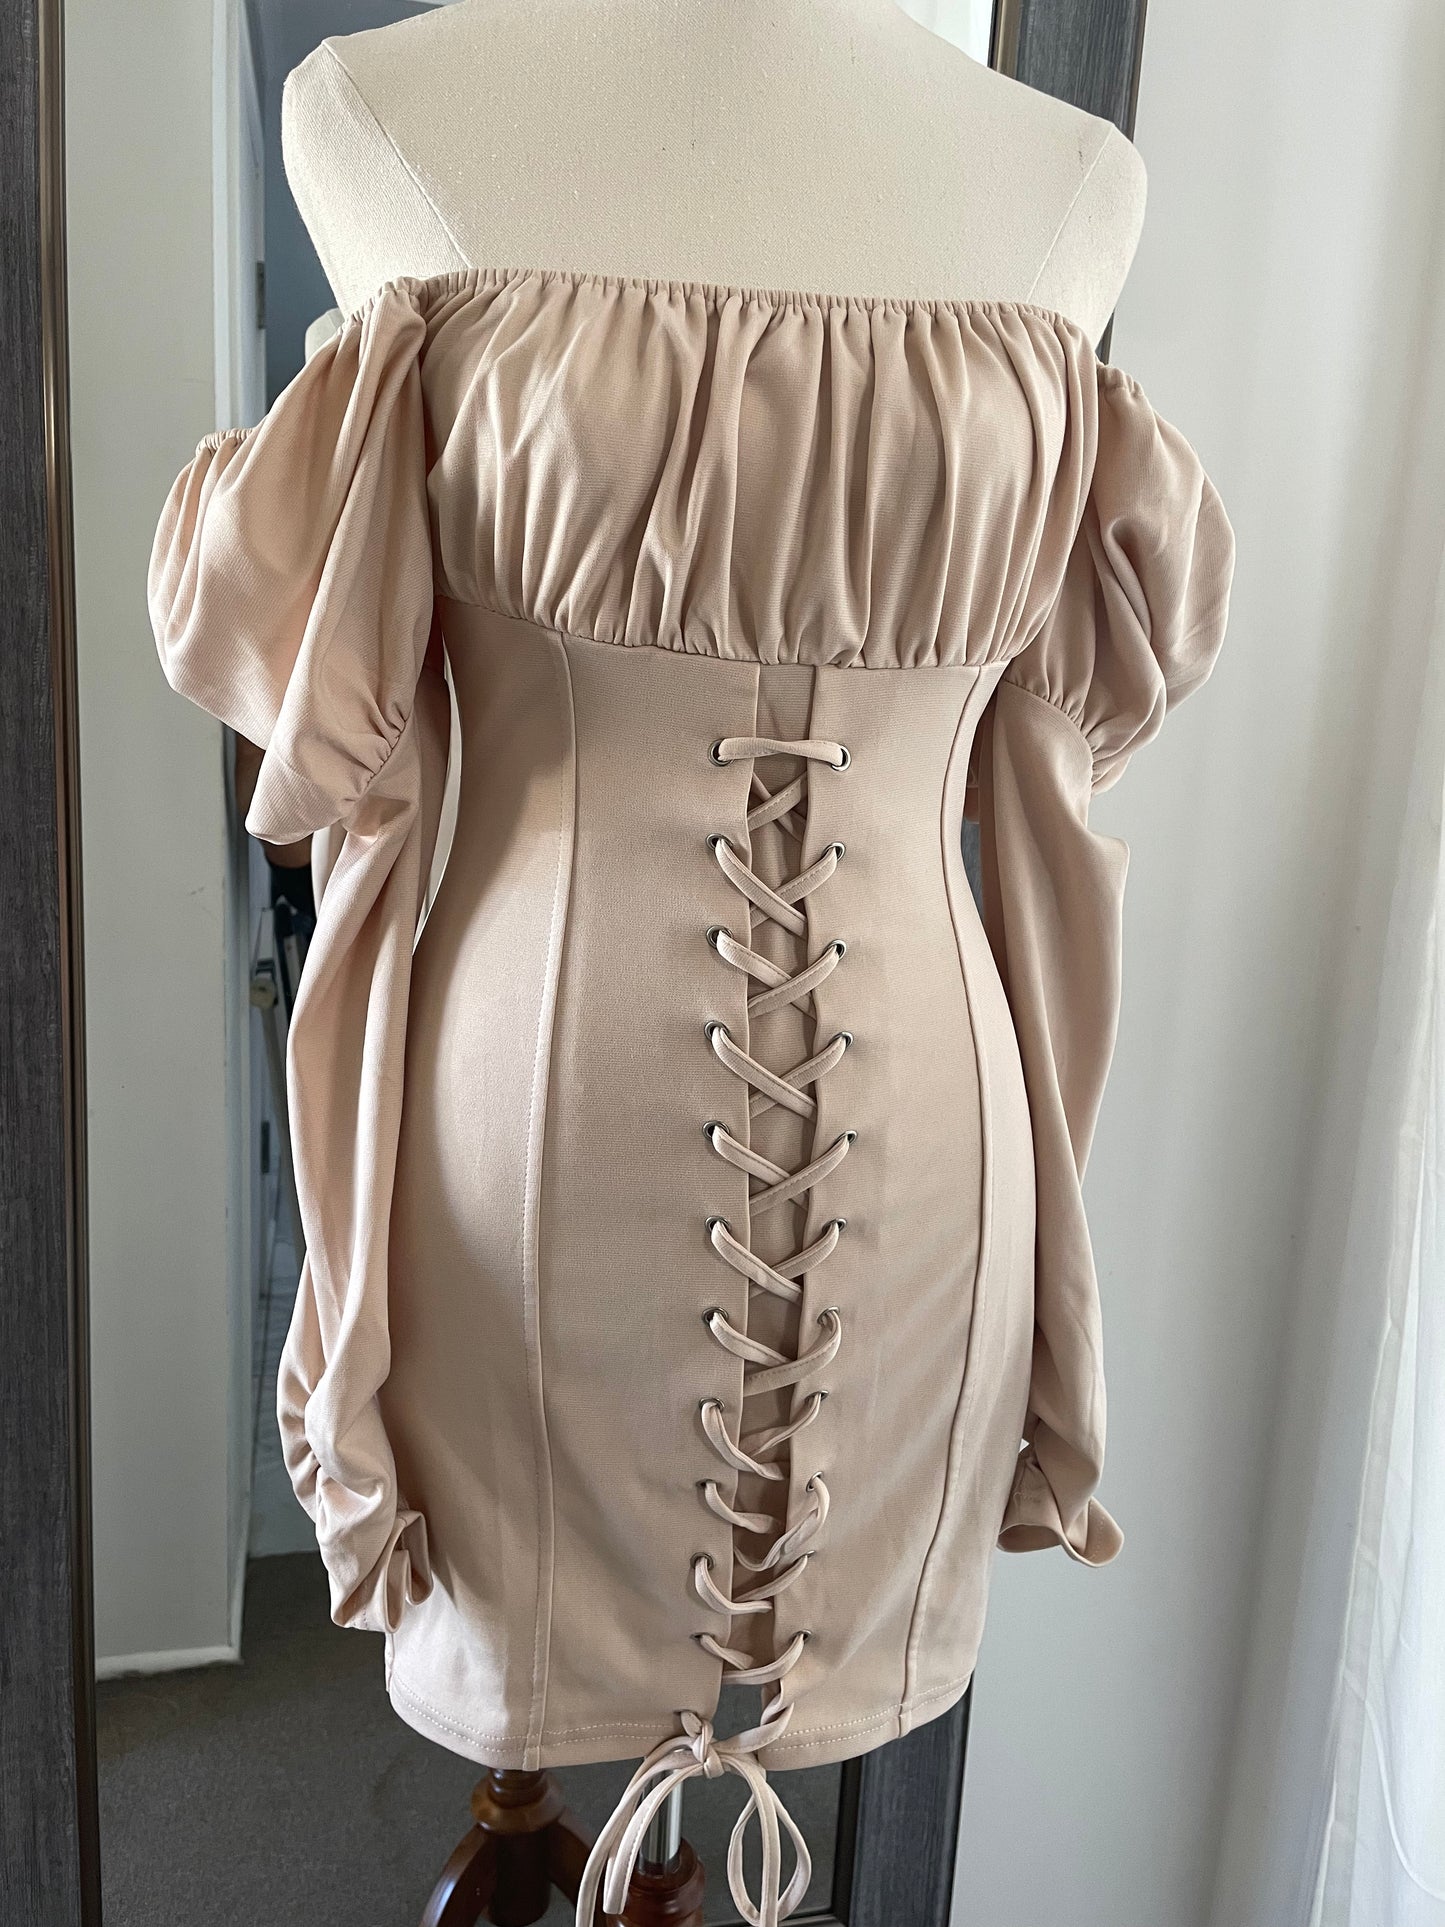 Dress by Charlotte Crosby